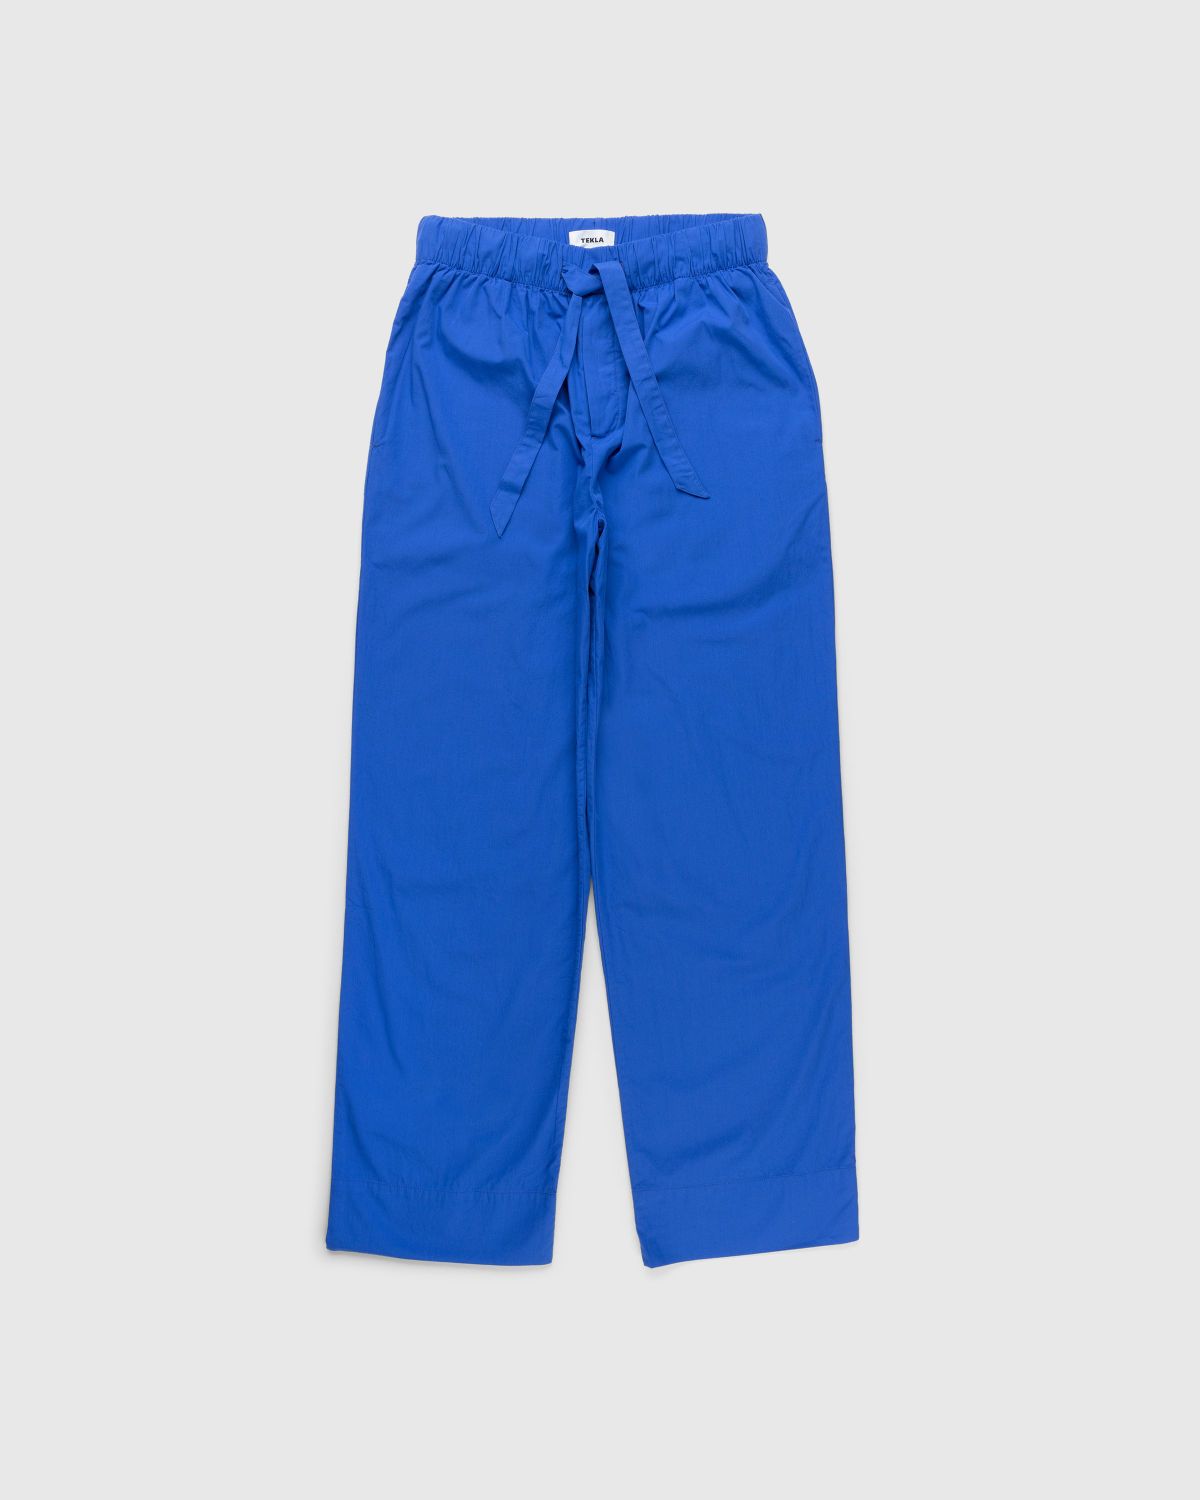 Tekla – Cotton Poplin Pyjamas Pants Royal Blue - Loungewear - Blue - Image 1